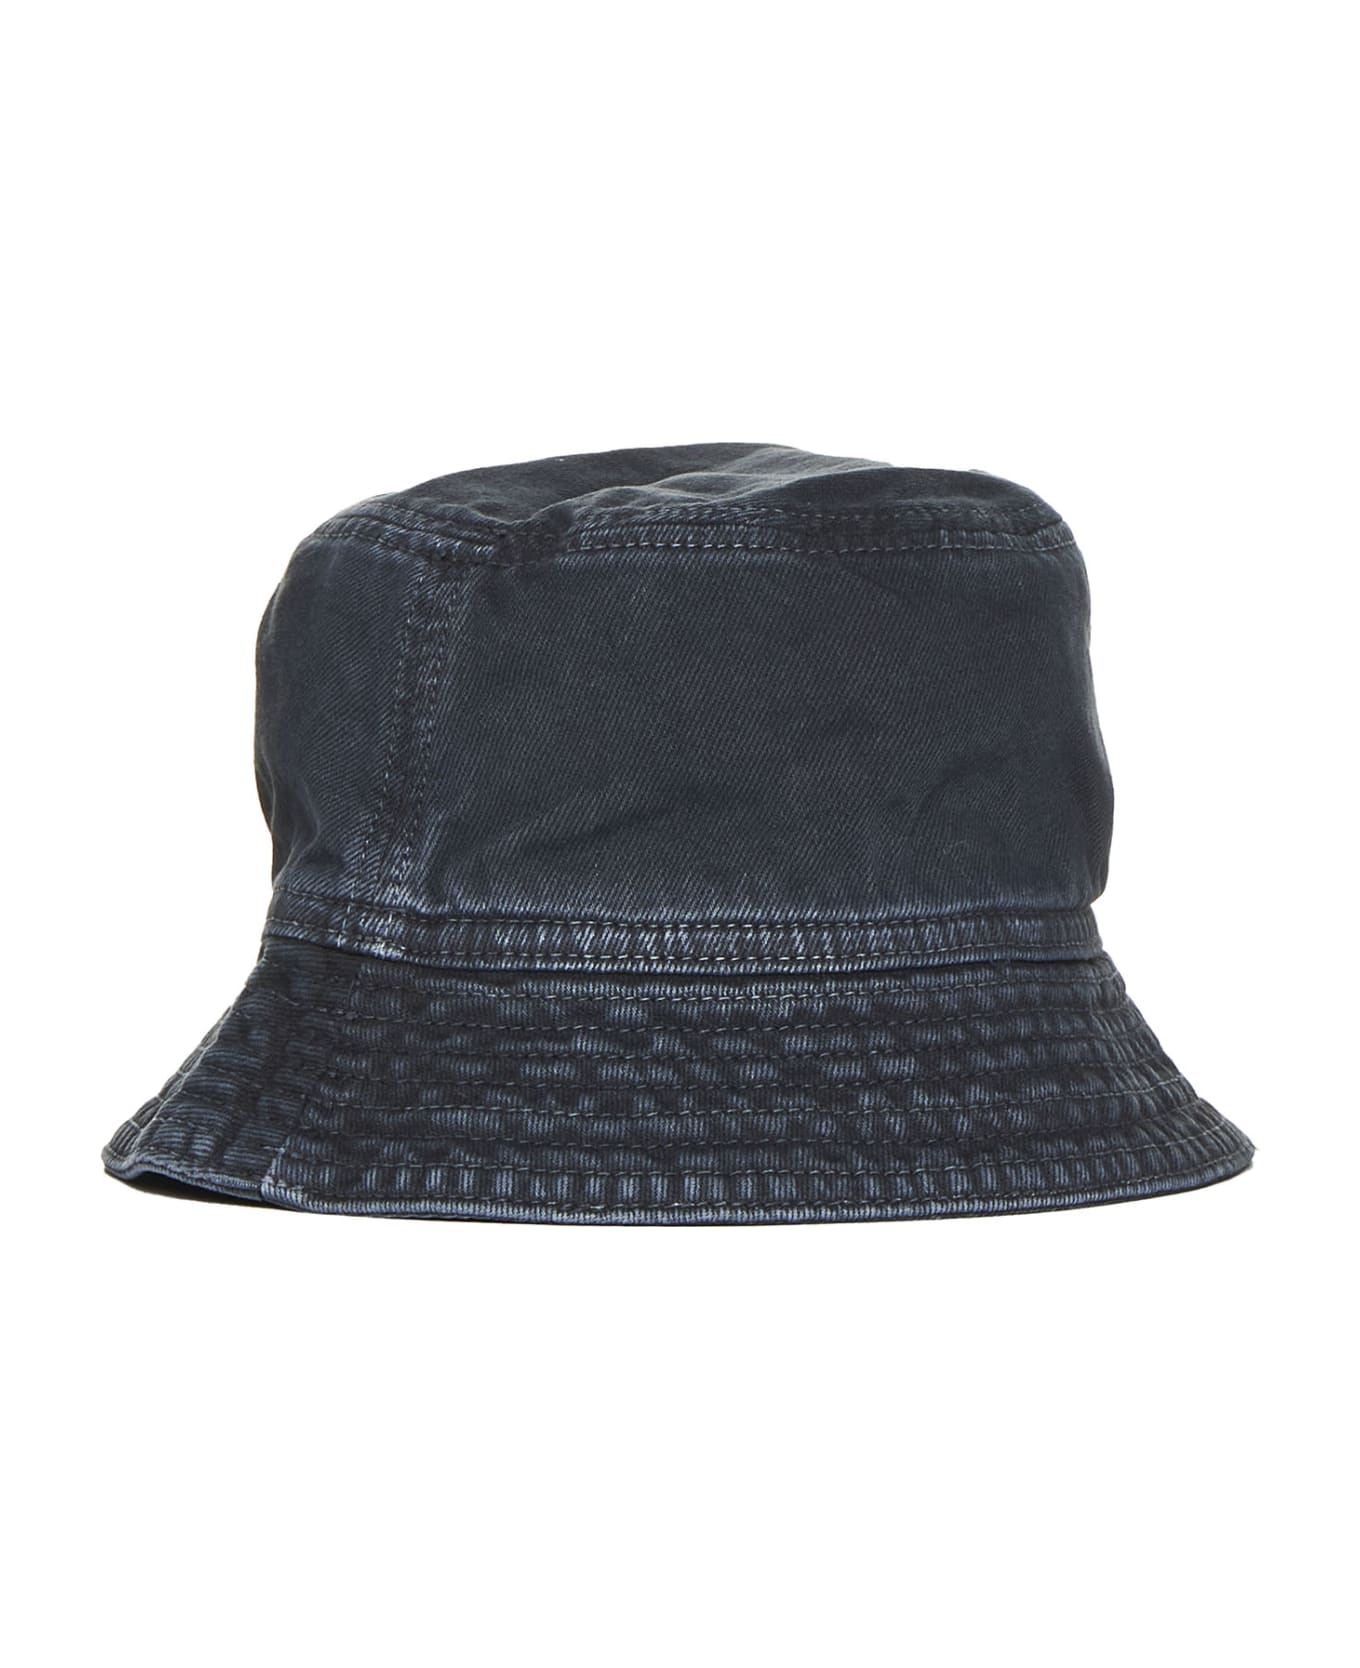 Carhartt Hat - Black stone dyed